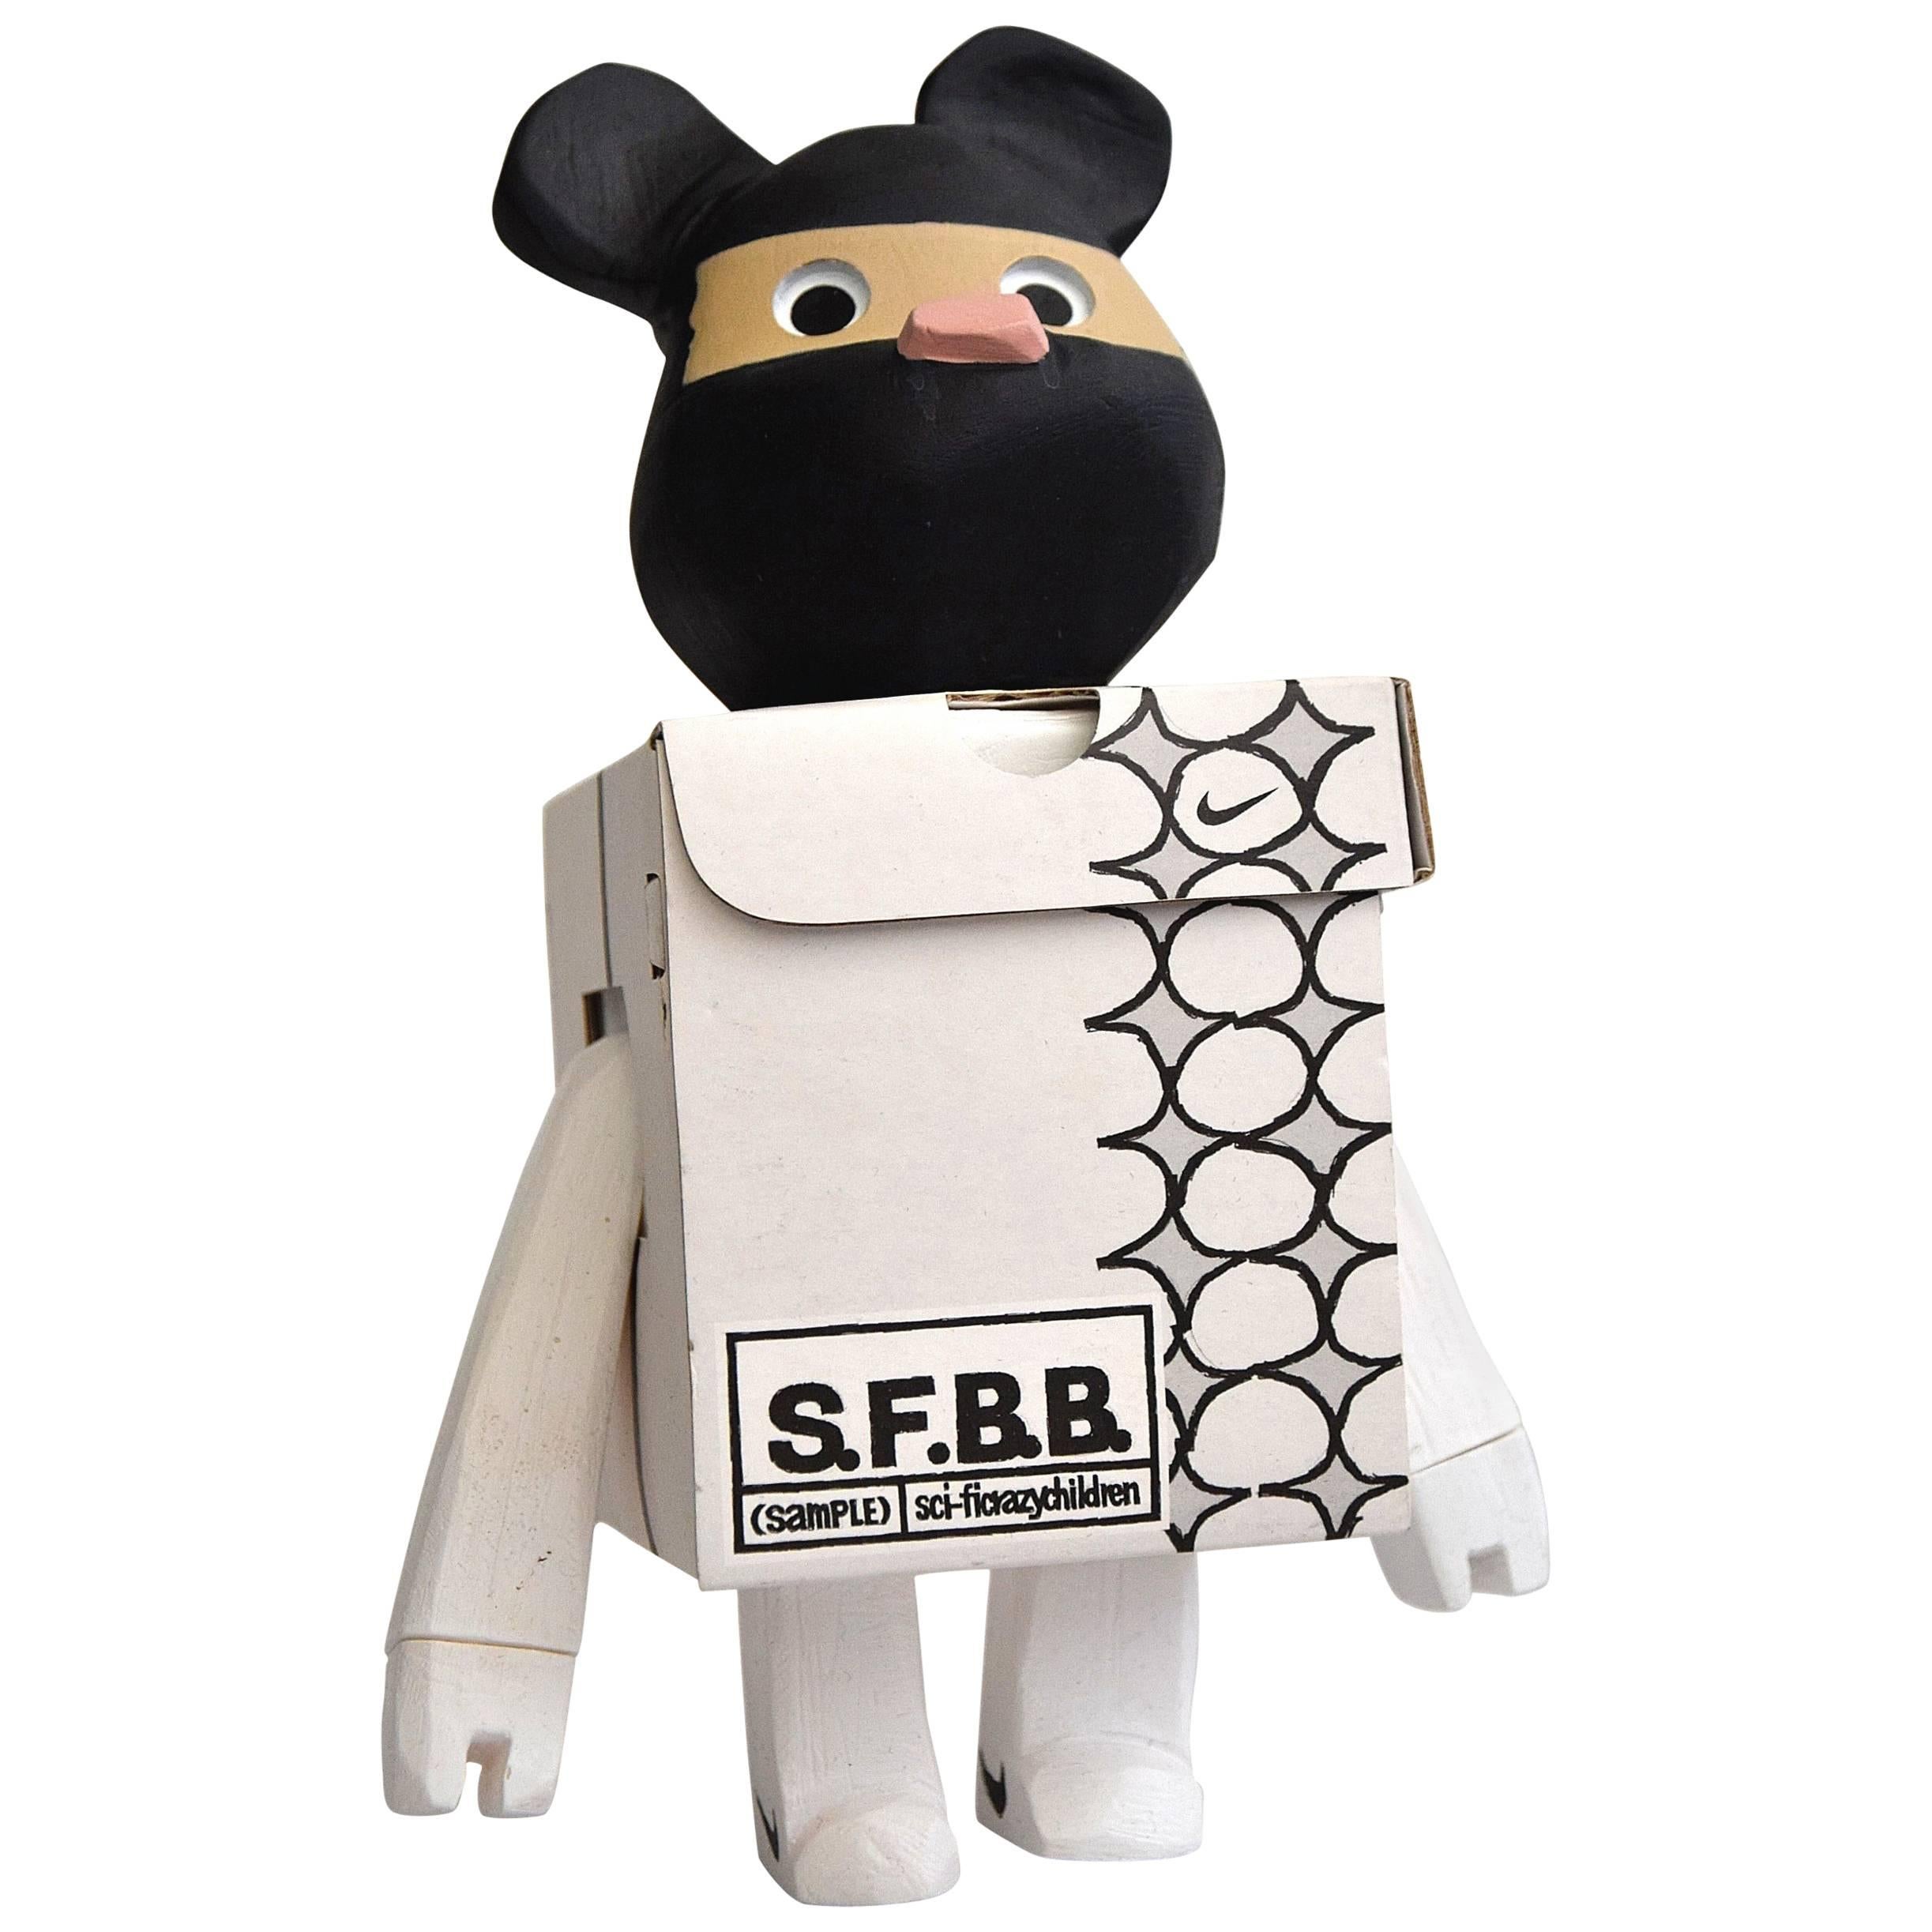 S.F.B.B. 'Sample' 2005 Michael Lau Designer Toy For Sale